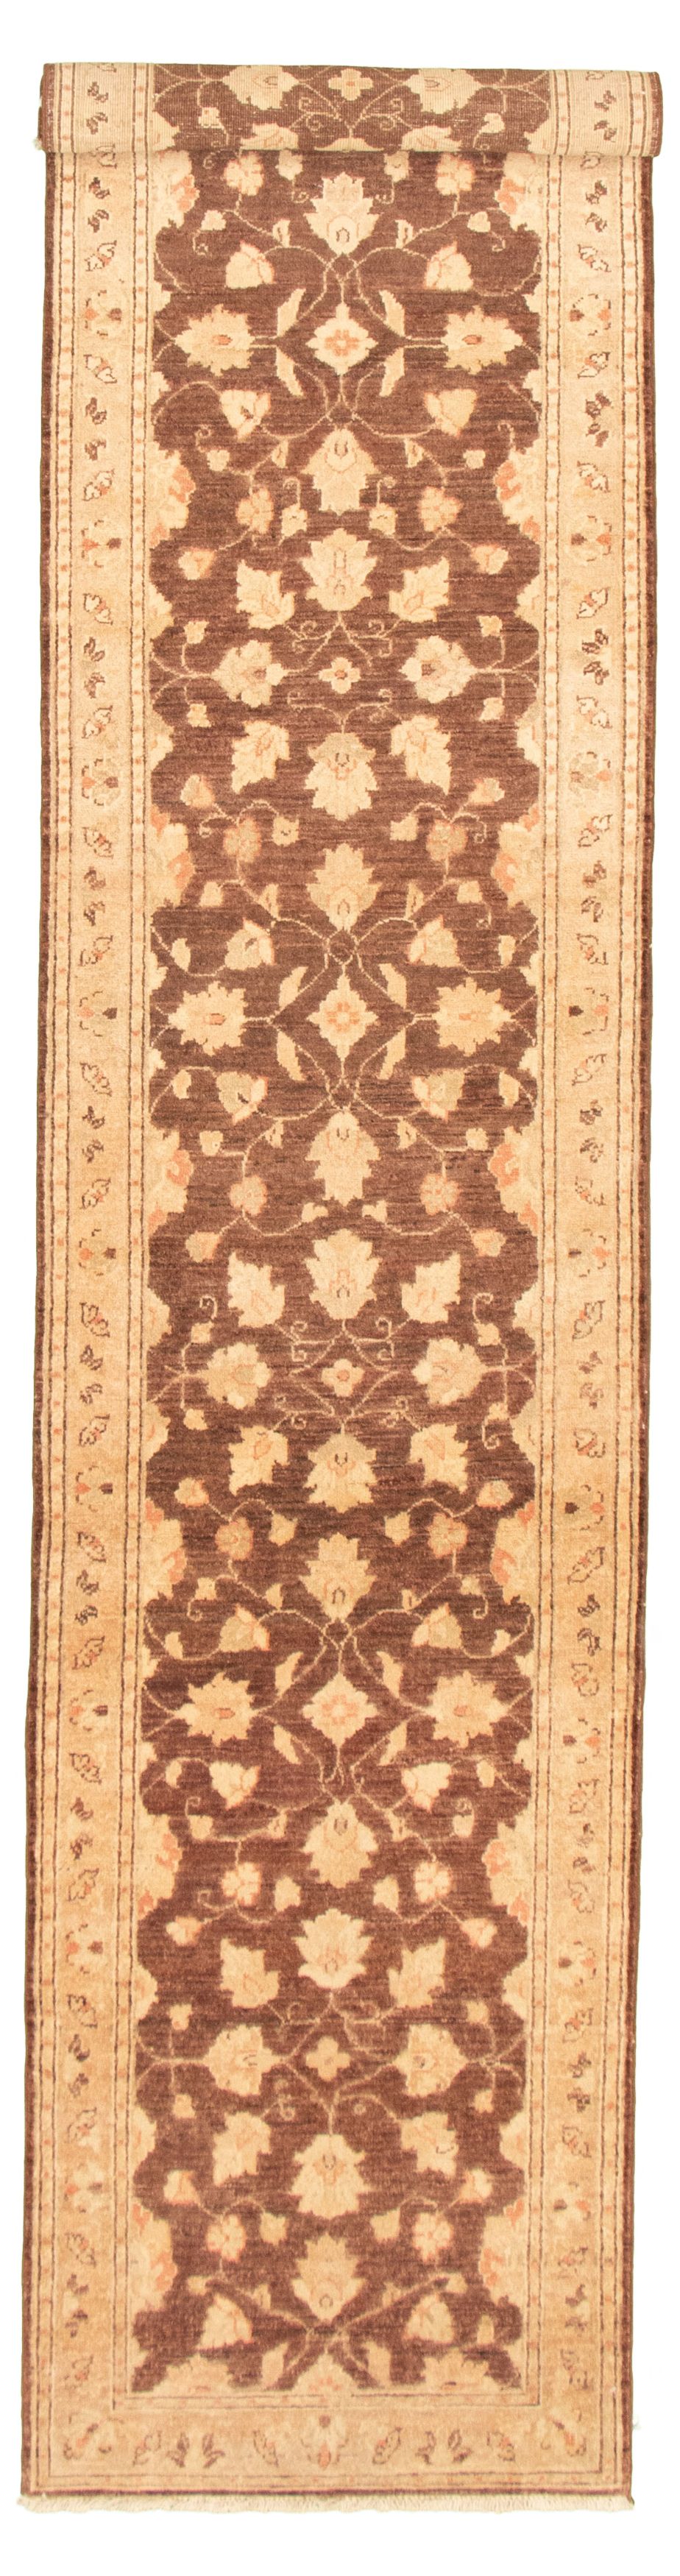 Hand-knotted Chobi Finest Dark Brown Wool Rug 2'7" x 13'1" Size: 2'7" x 13'1"  